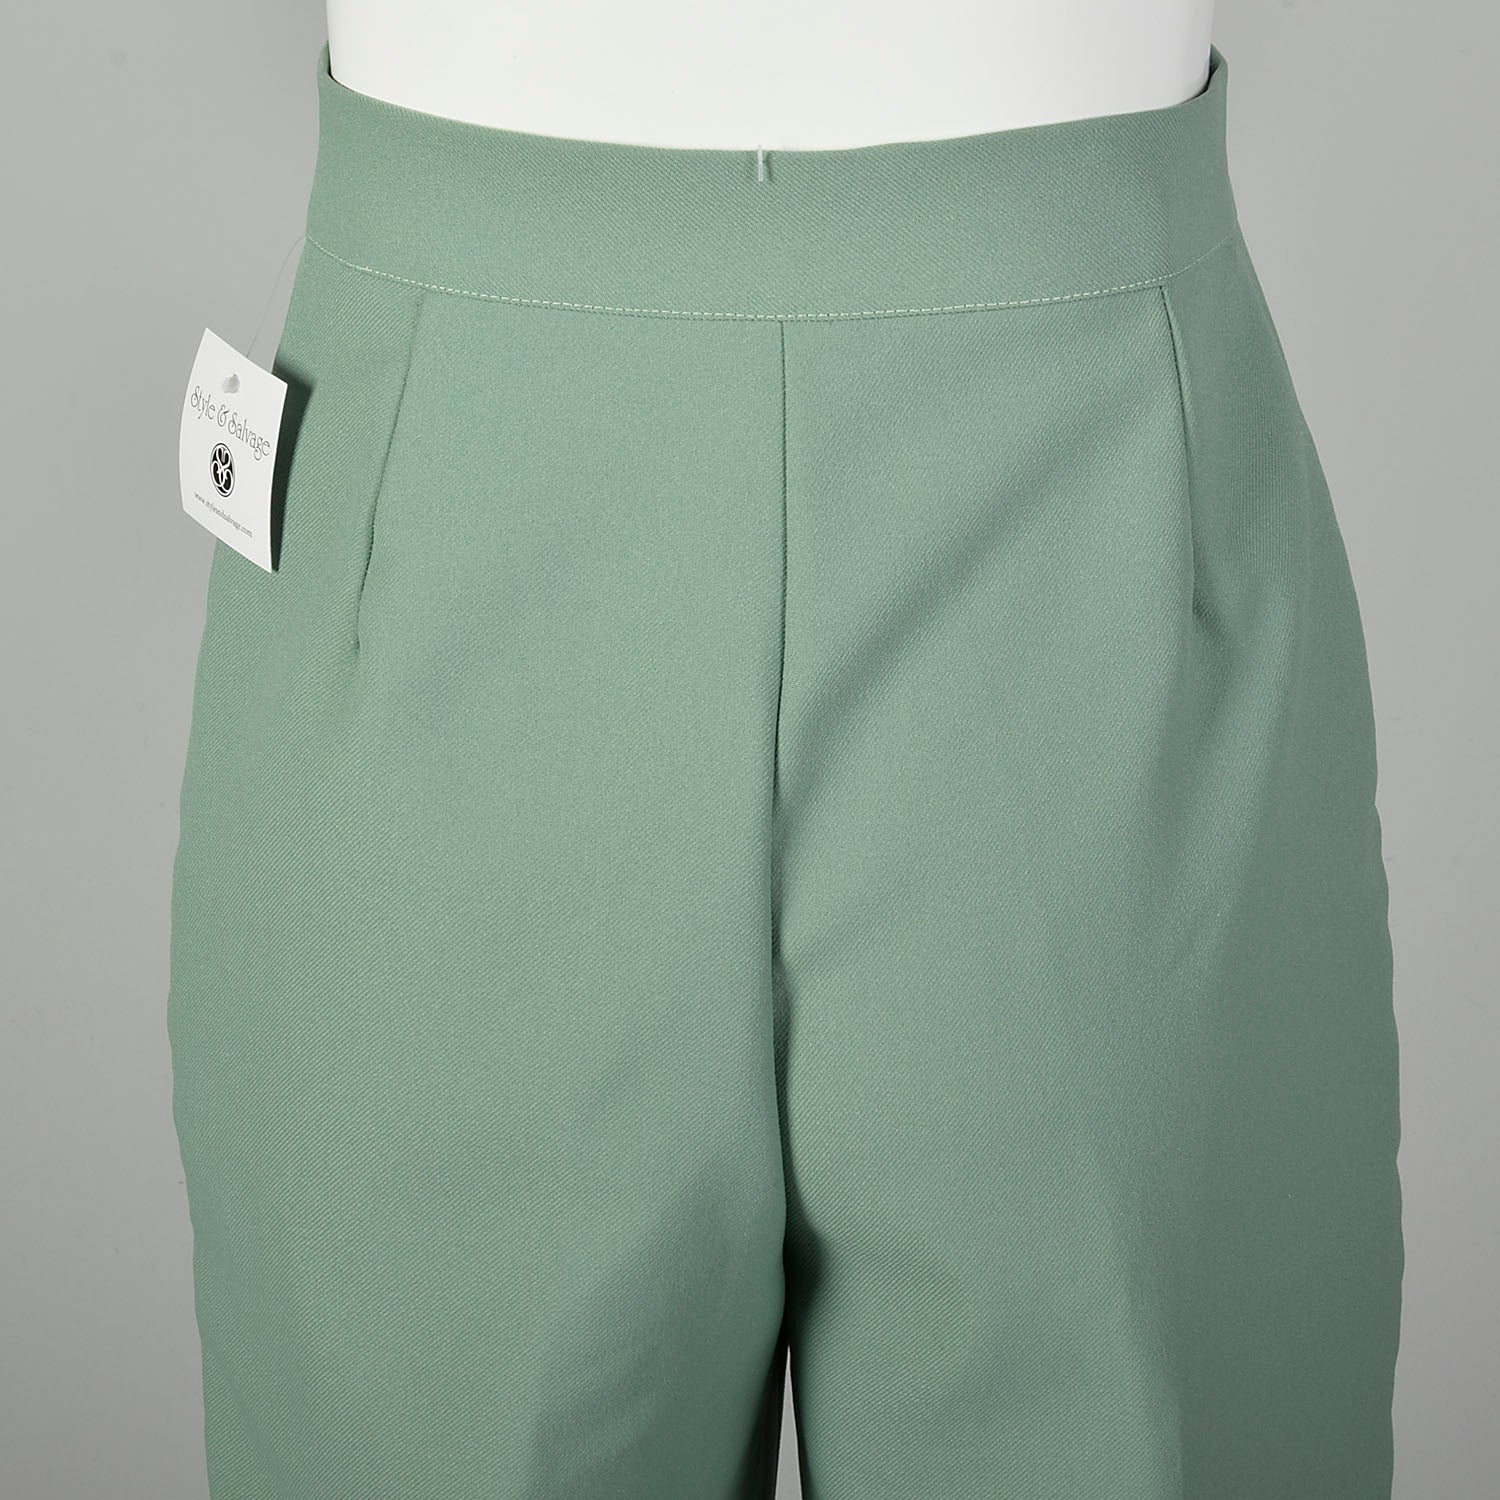 Small 1970s Mint Green Pants Boho Wide Leg High Rise Polyester Bell Bottoms